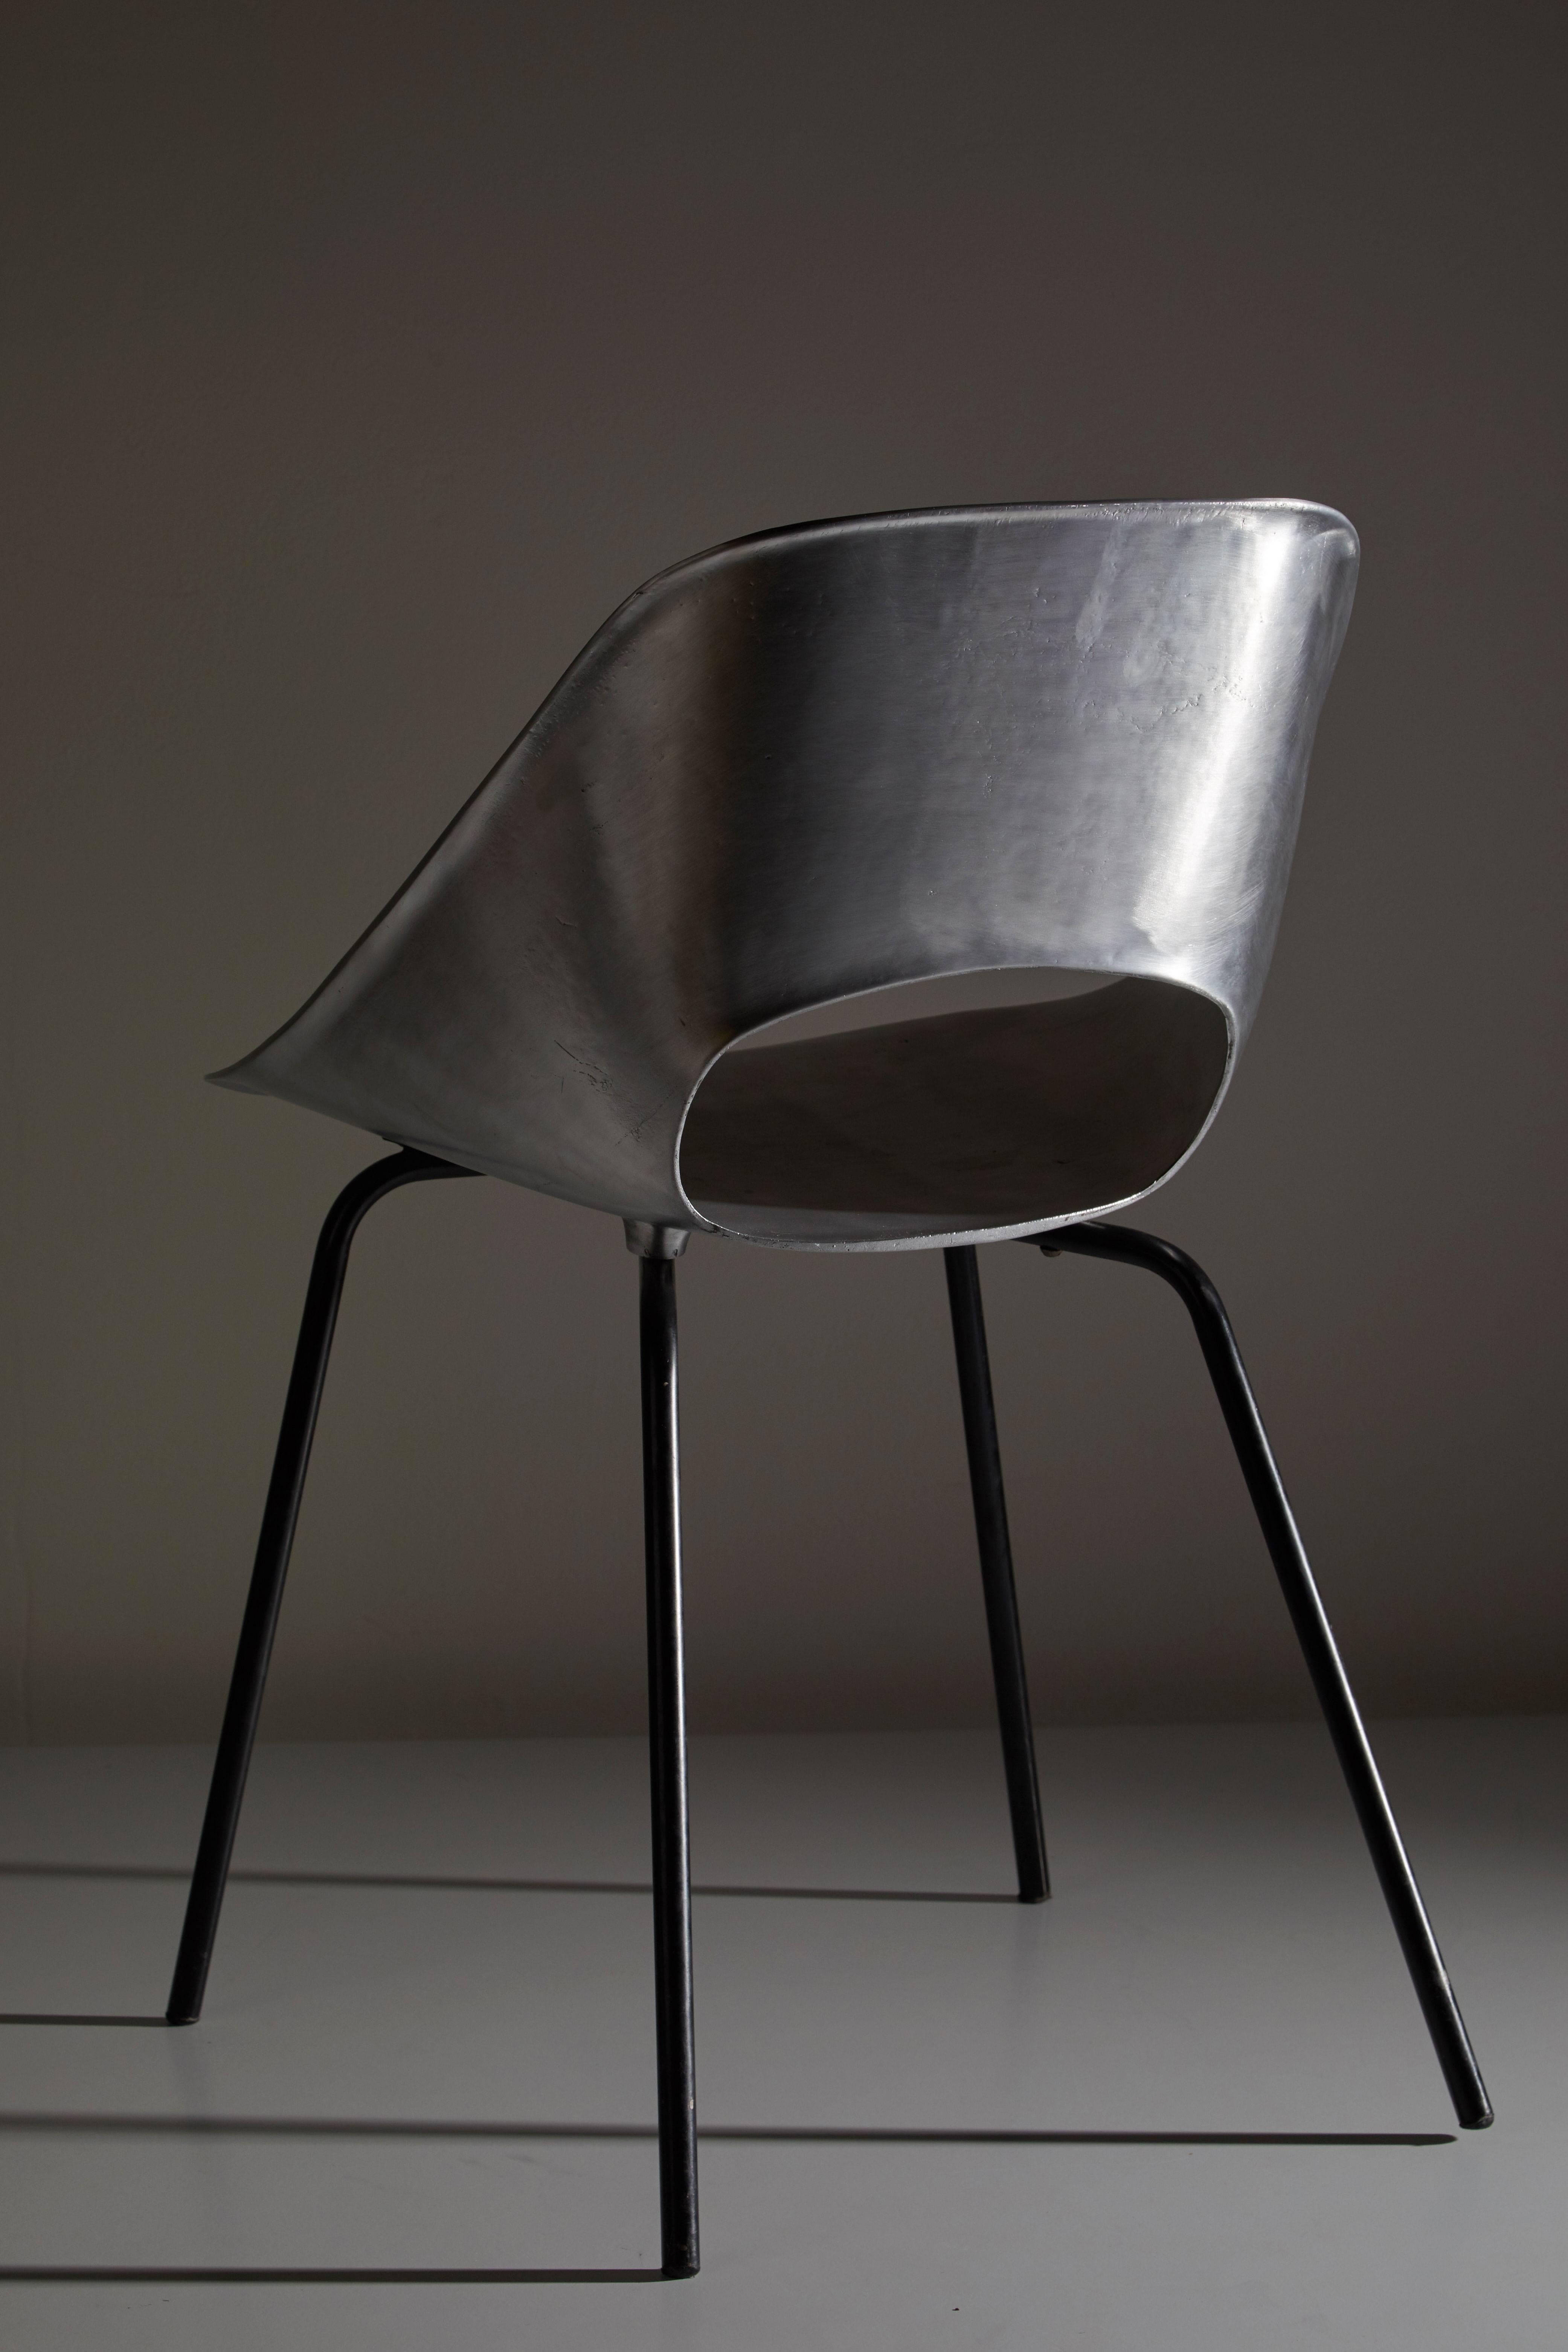 Cast Tulip Chair by Pierre Guariche